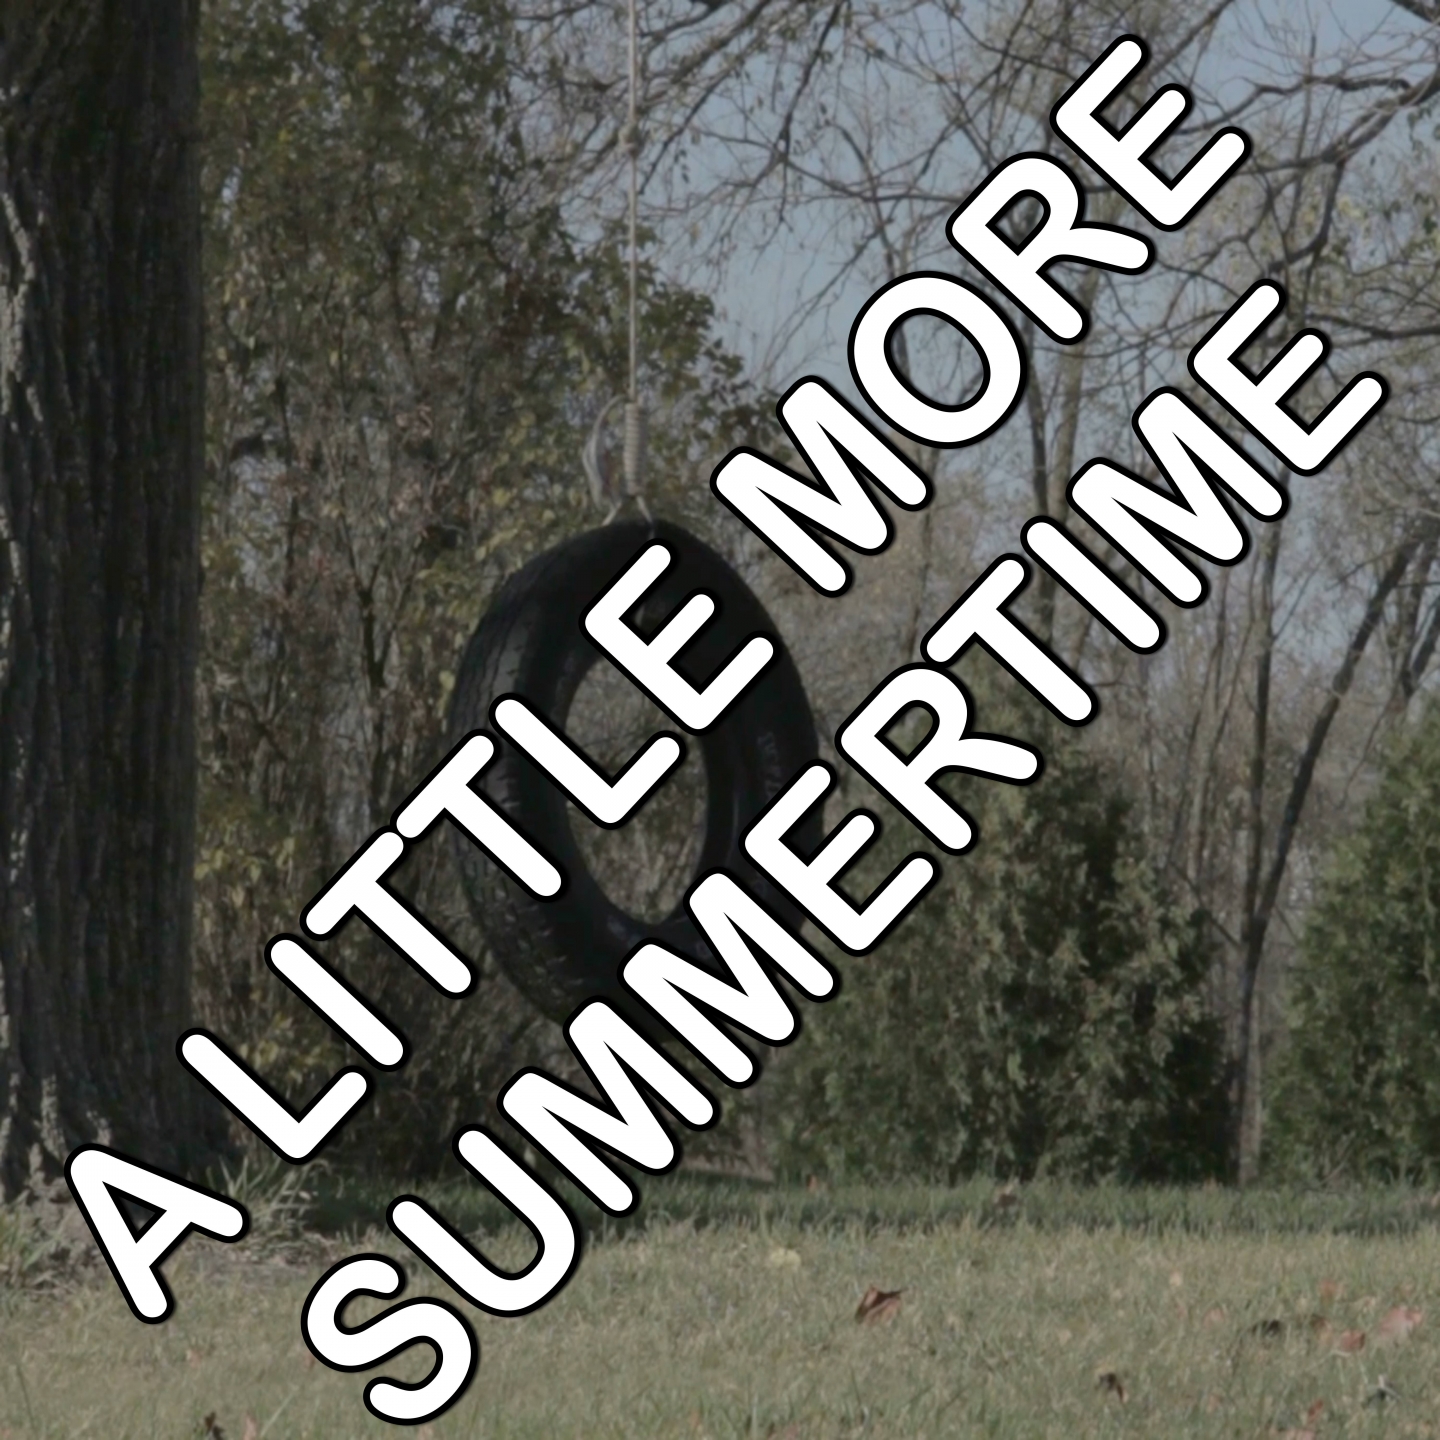 A Little More Summertime - Tribute to Jason Aldean